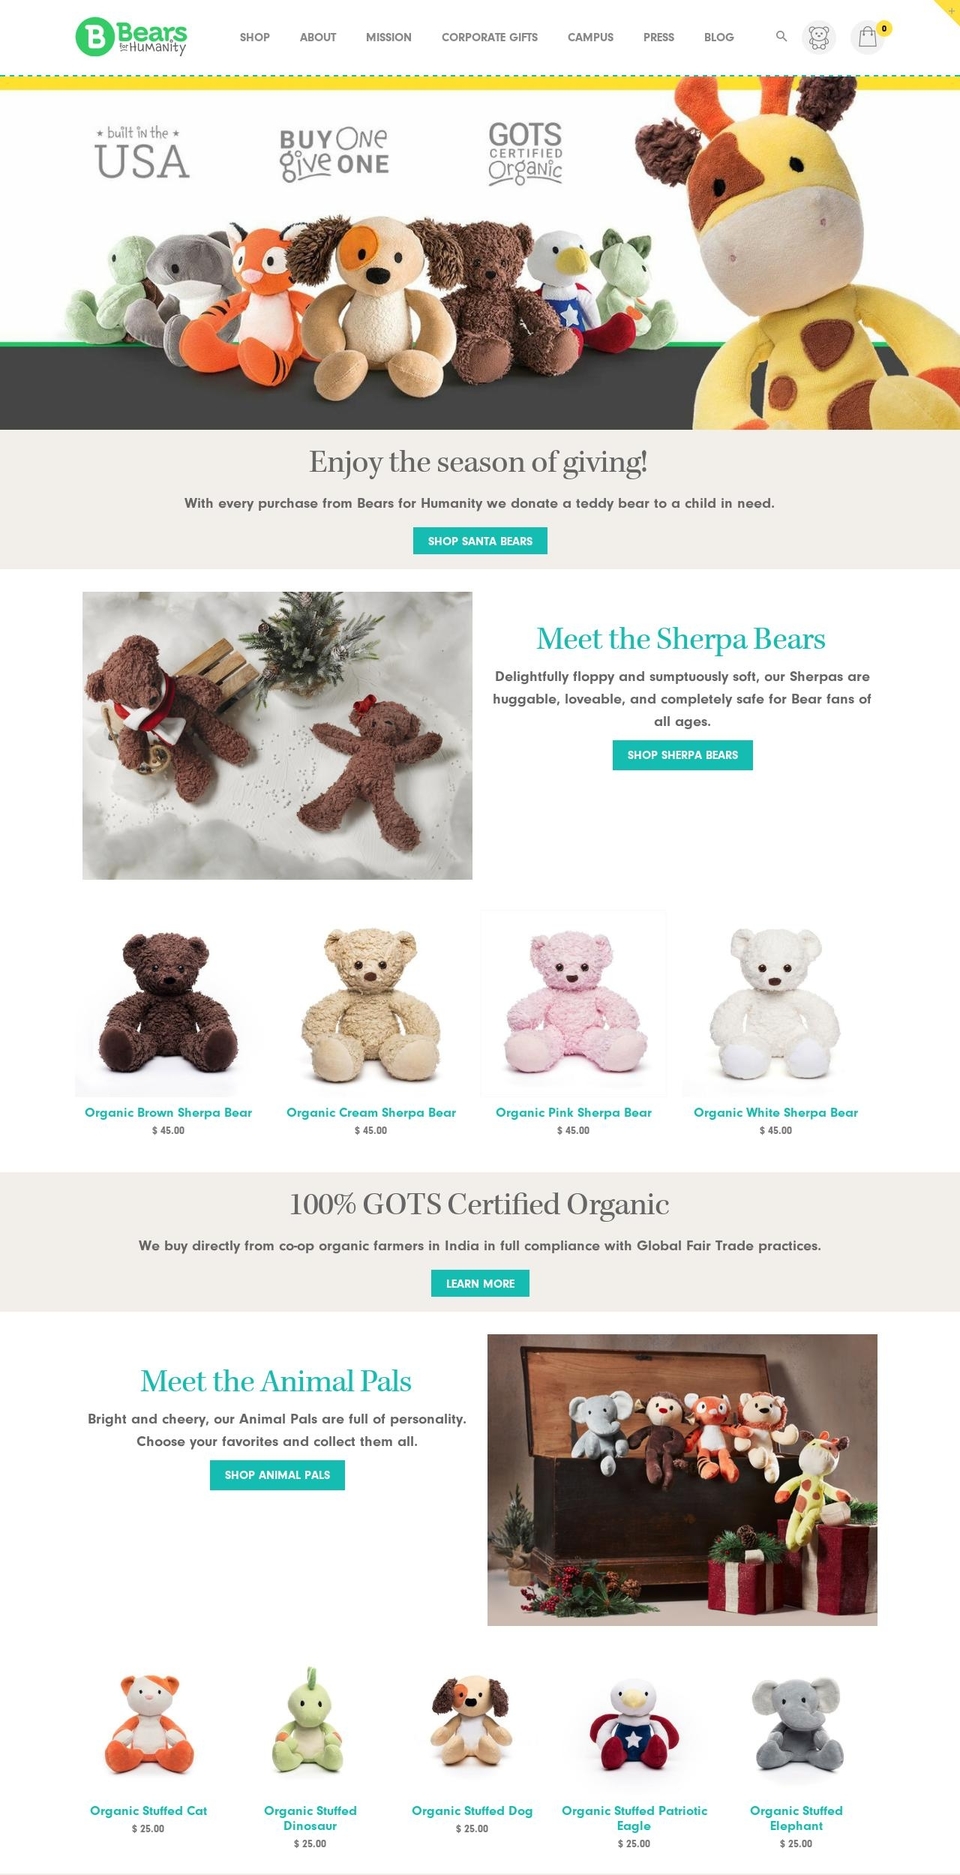 bears4humanity.com shopify website screenshot